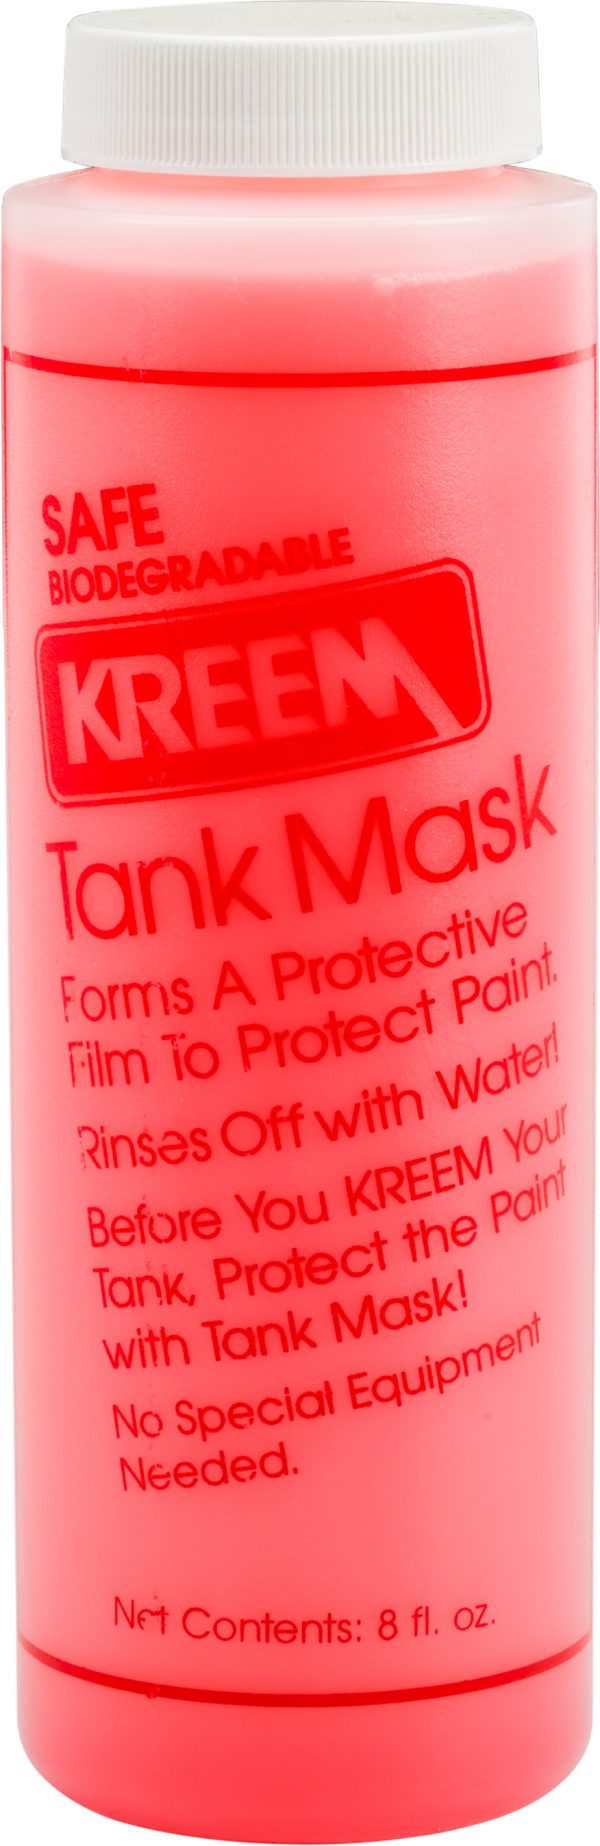 Tank Mask Image